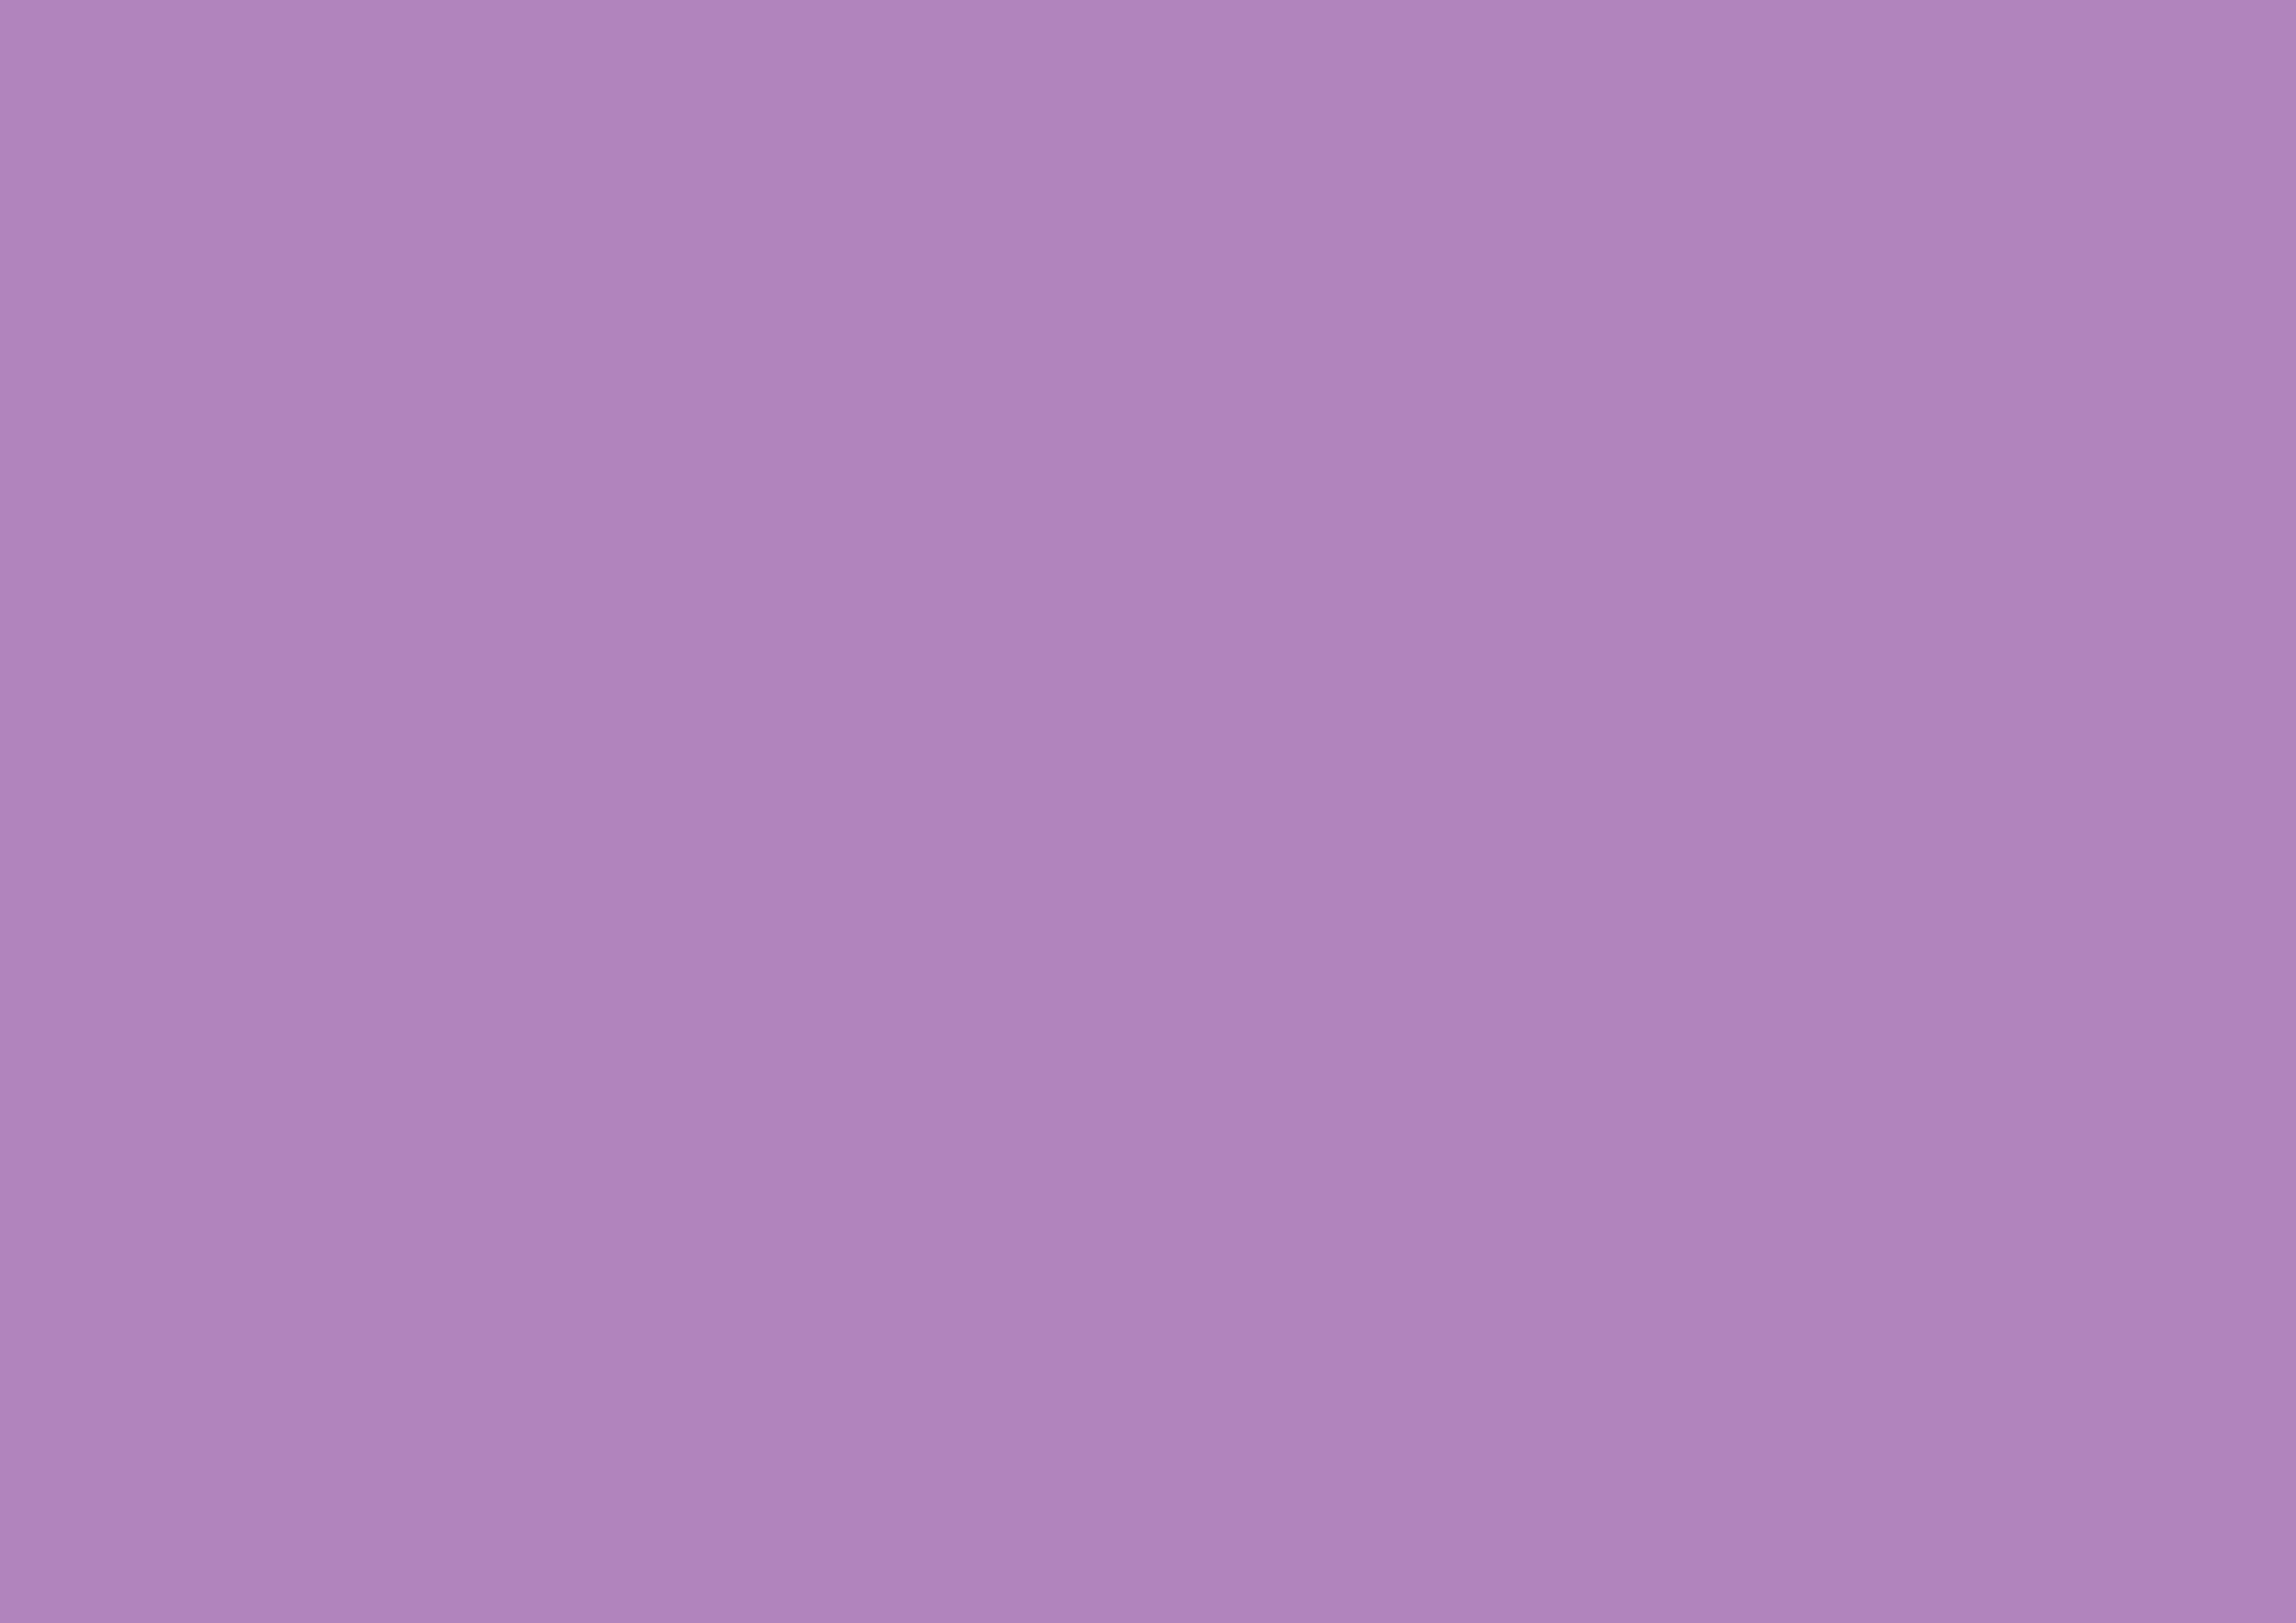 3508x2480 African Violet Solid Color Background